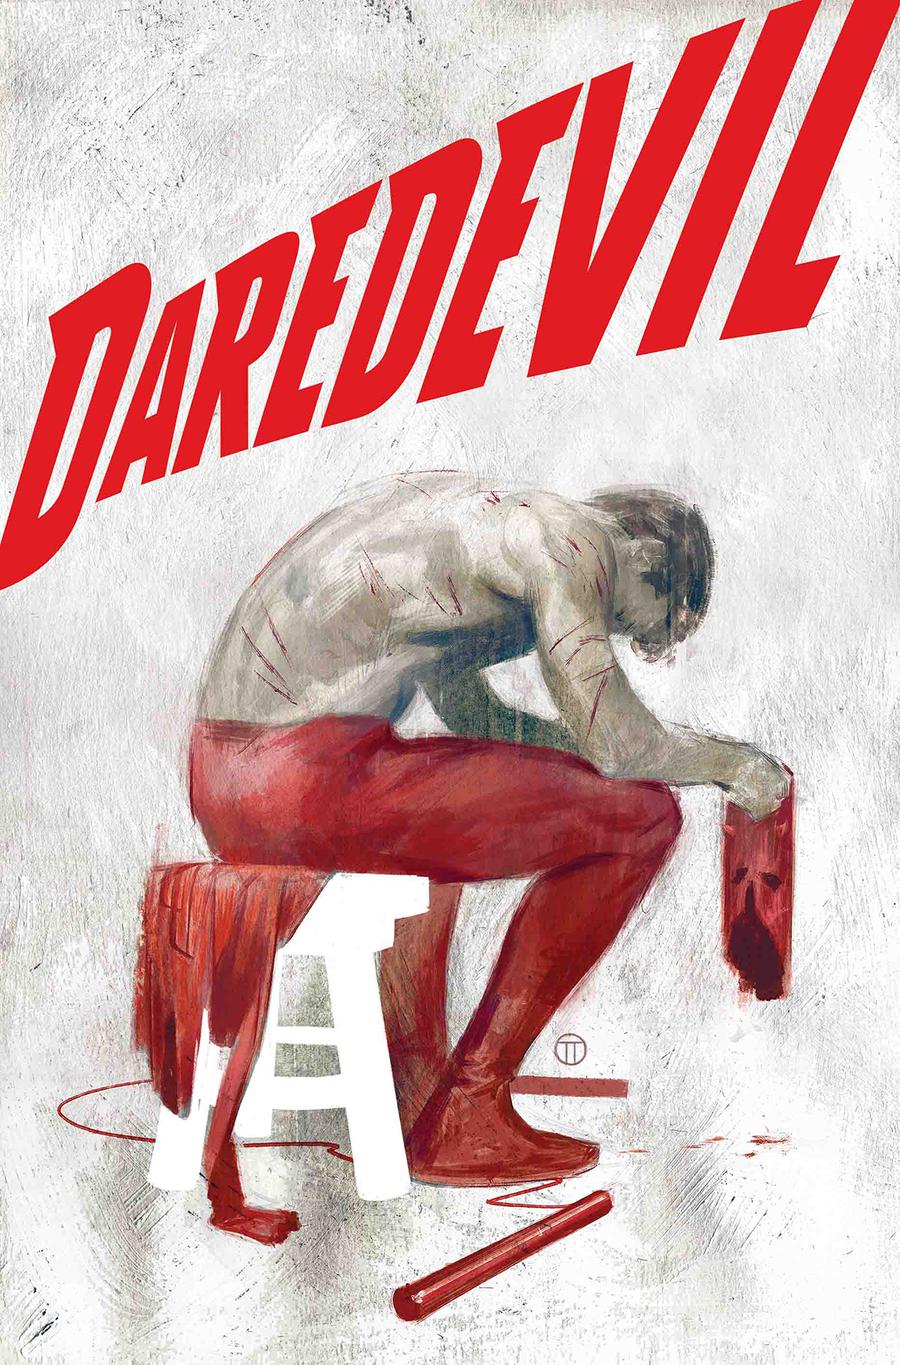 Daredevil Vol 6 #5 Cover A 1st Ptg Regular Julian Totino Tedesco Cover